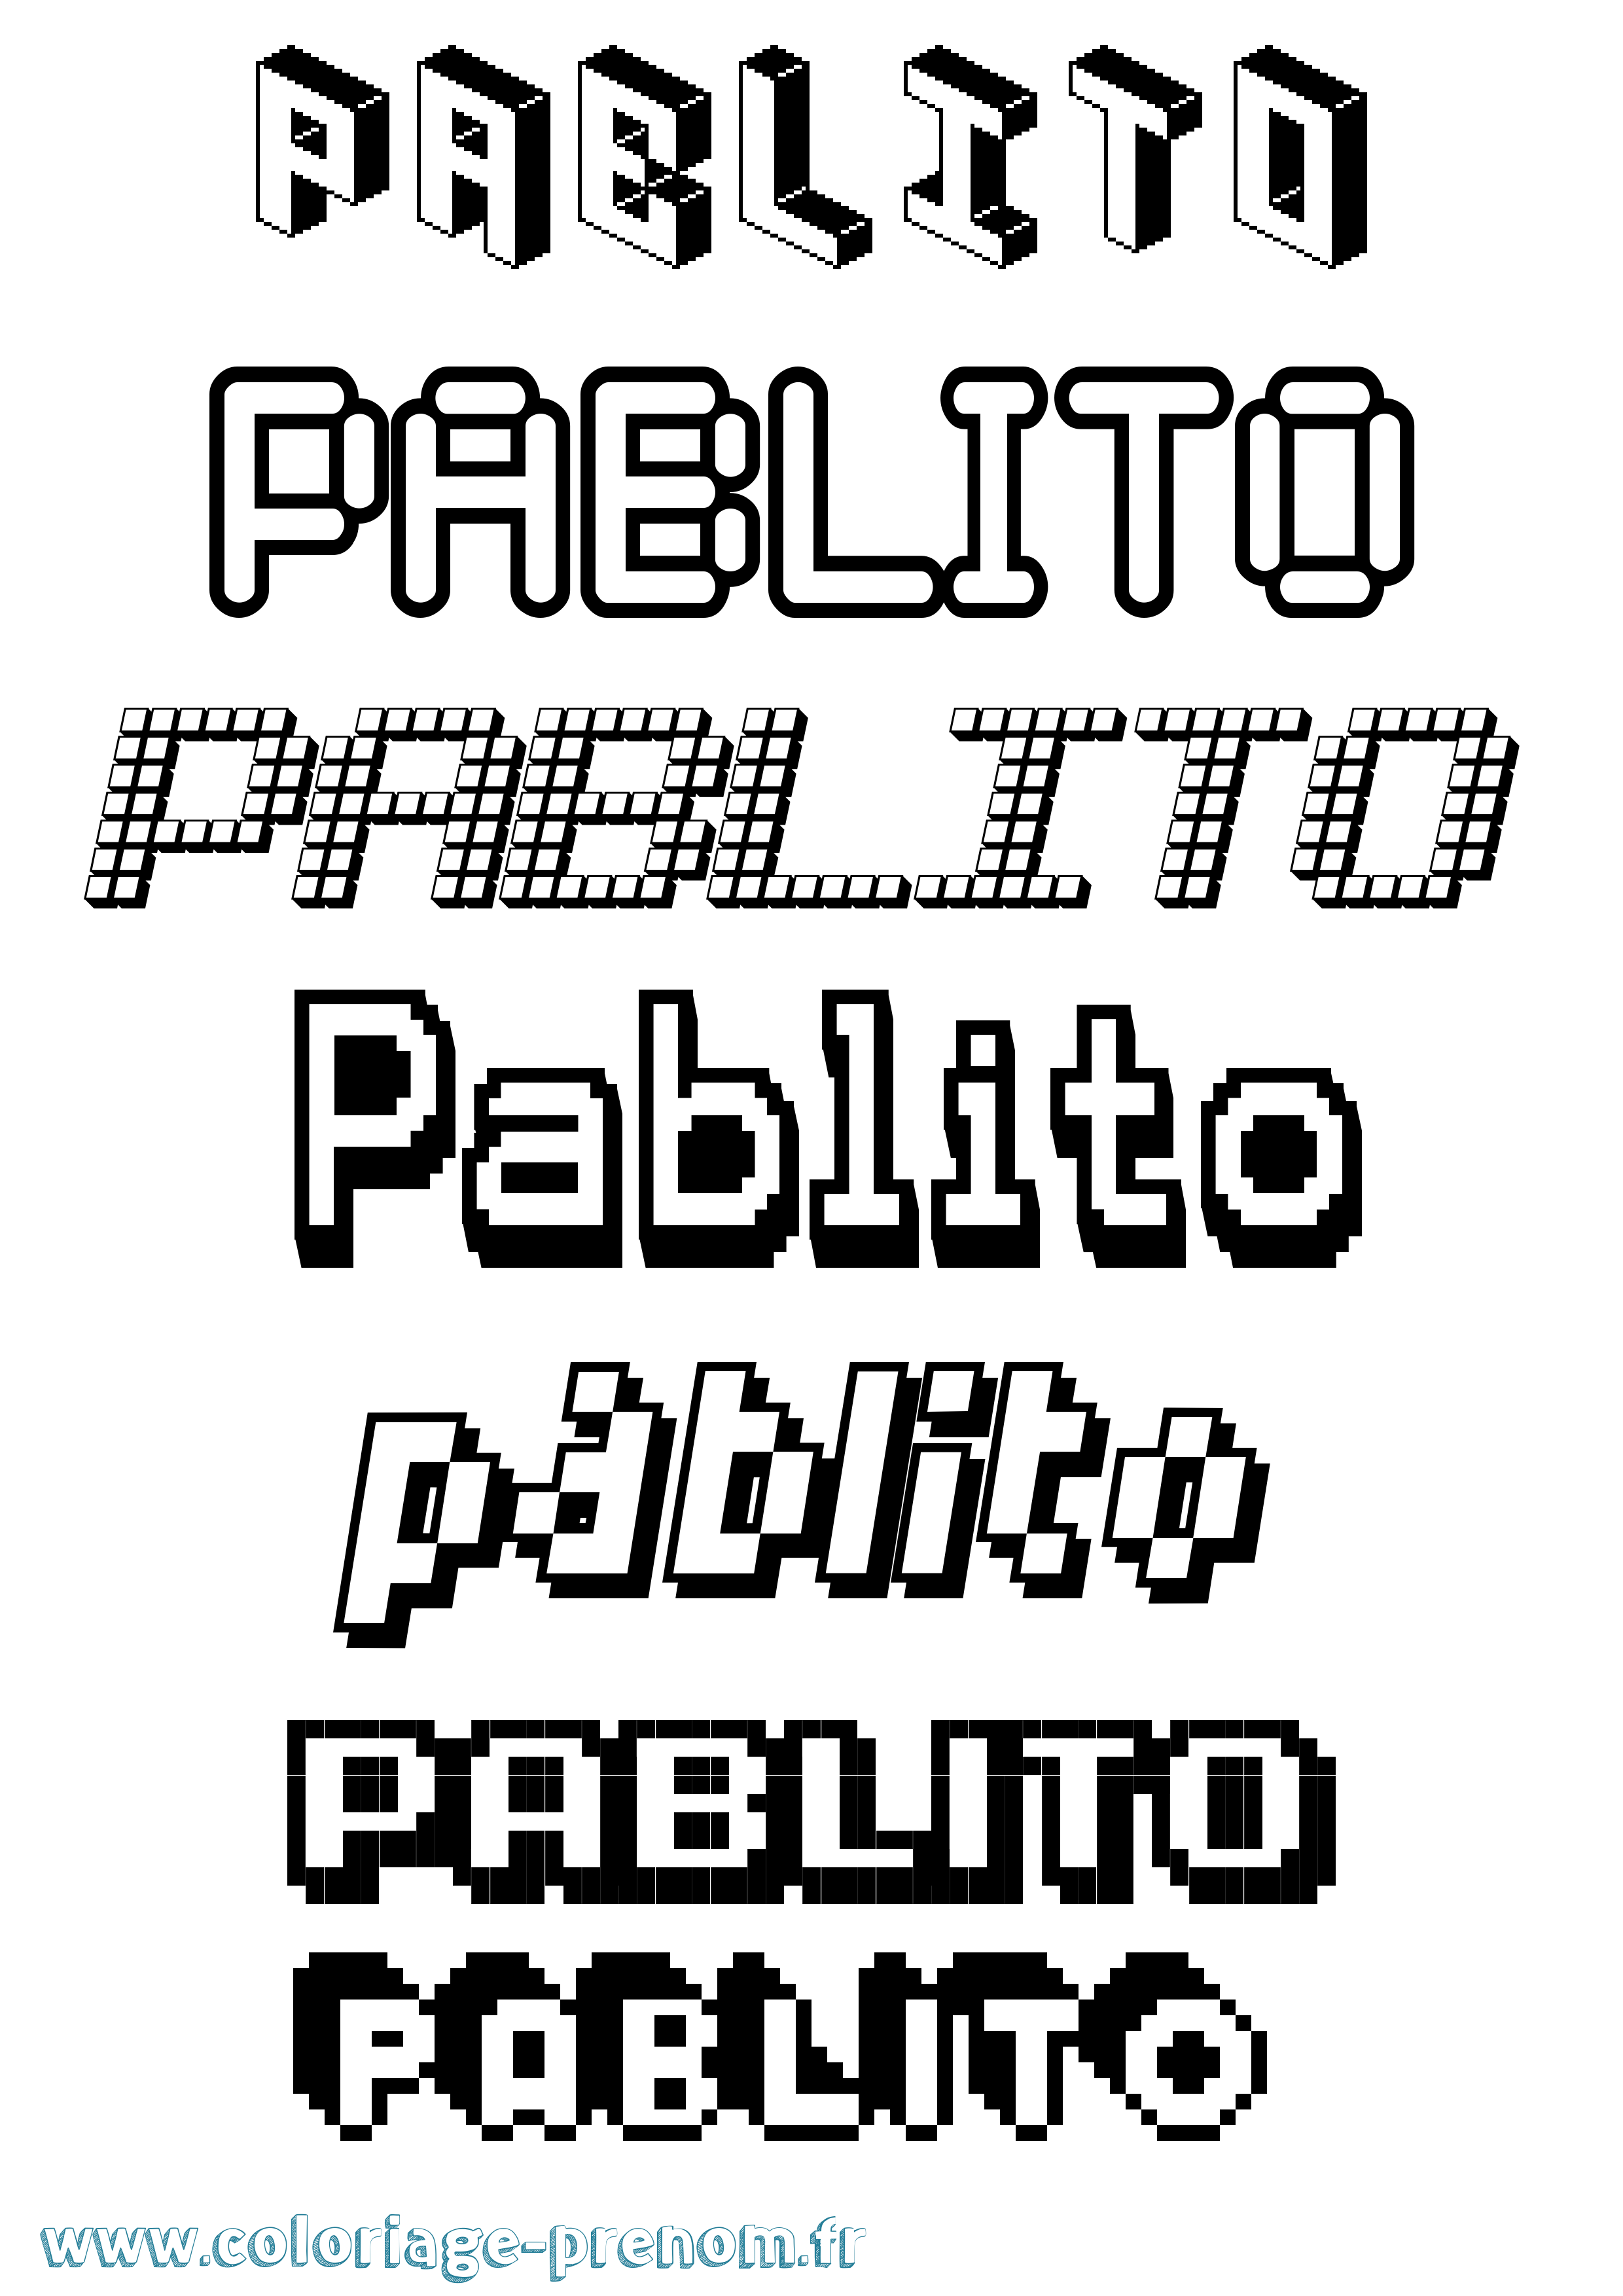 Coloriage prénom Pablito Pixel